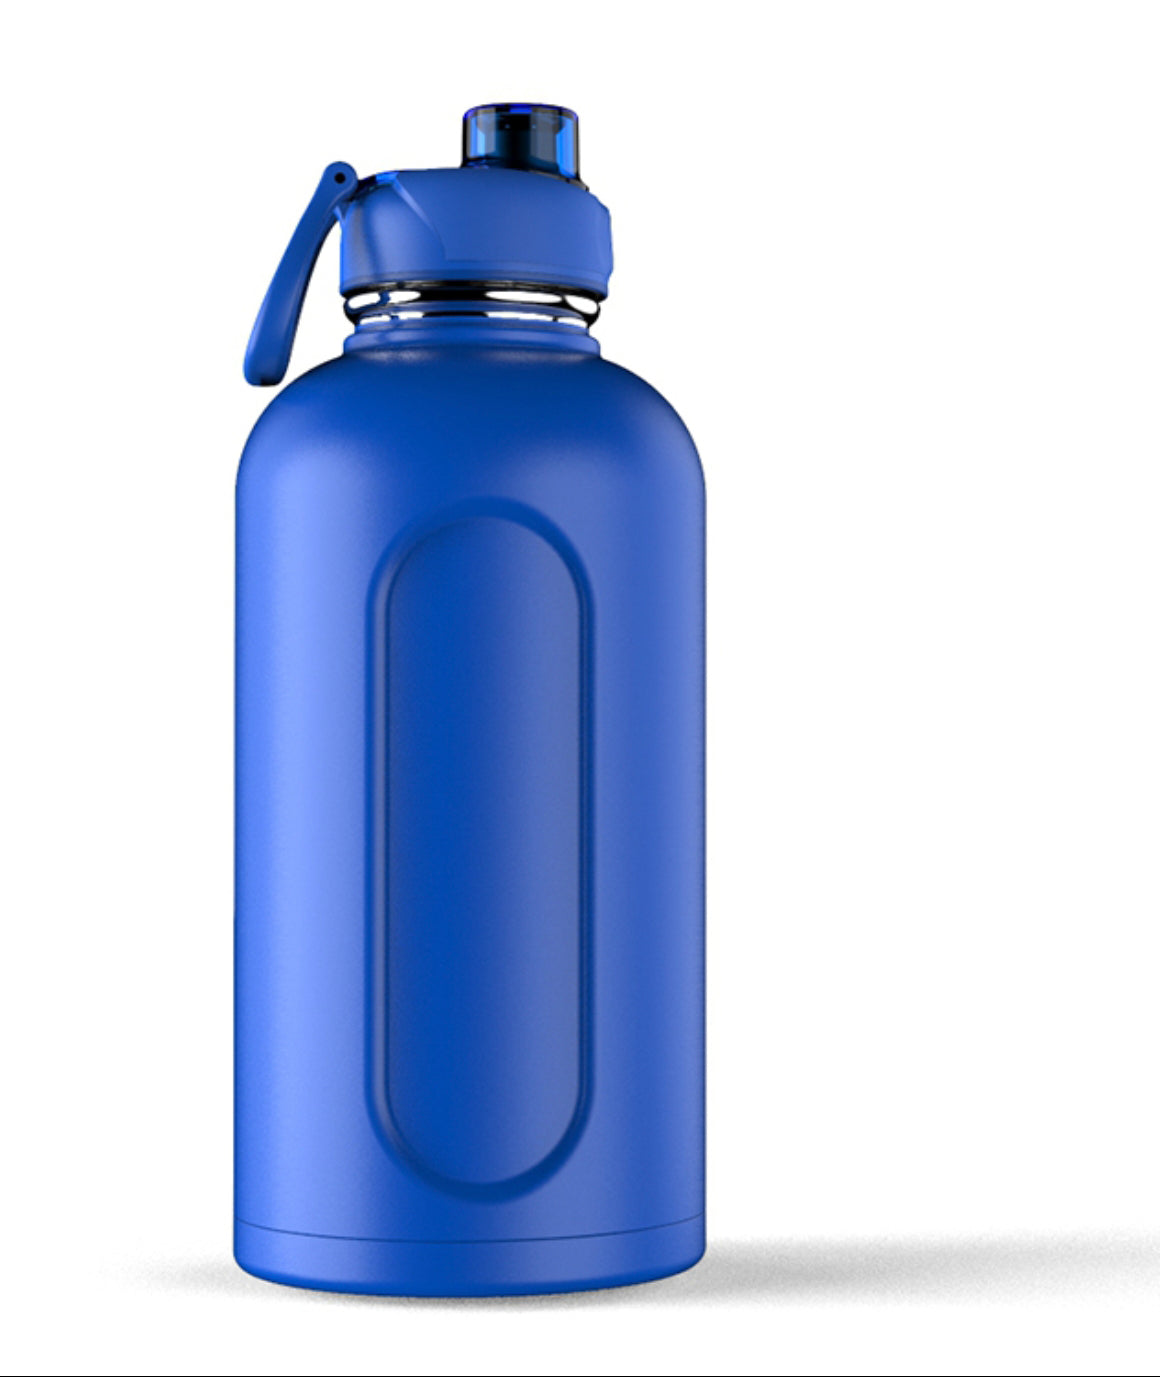 ShakeSphere Stainless Steel water bottle 67.6 Fl Oz Blue 